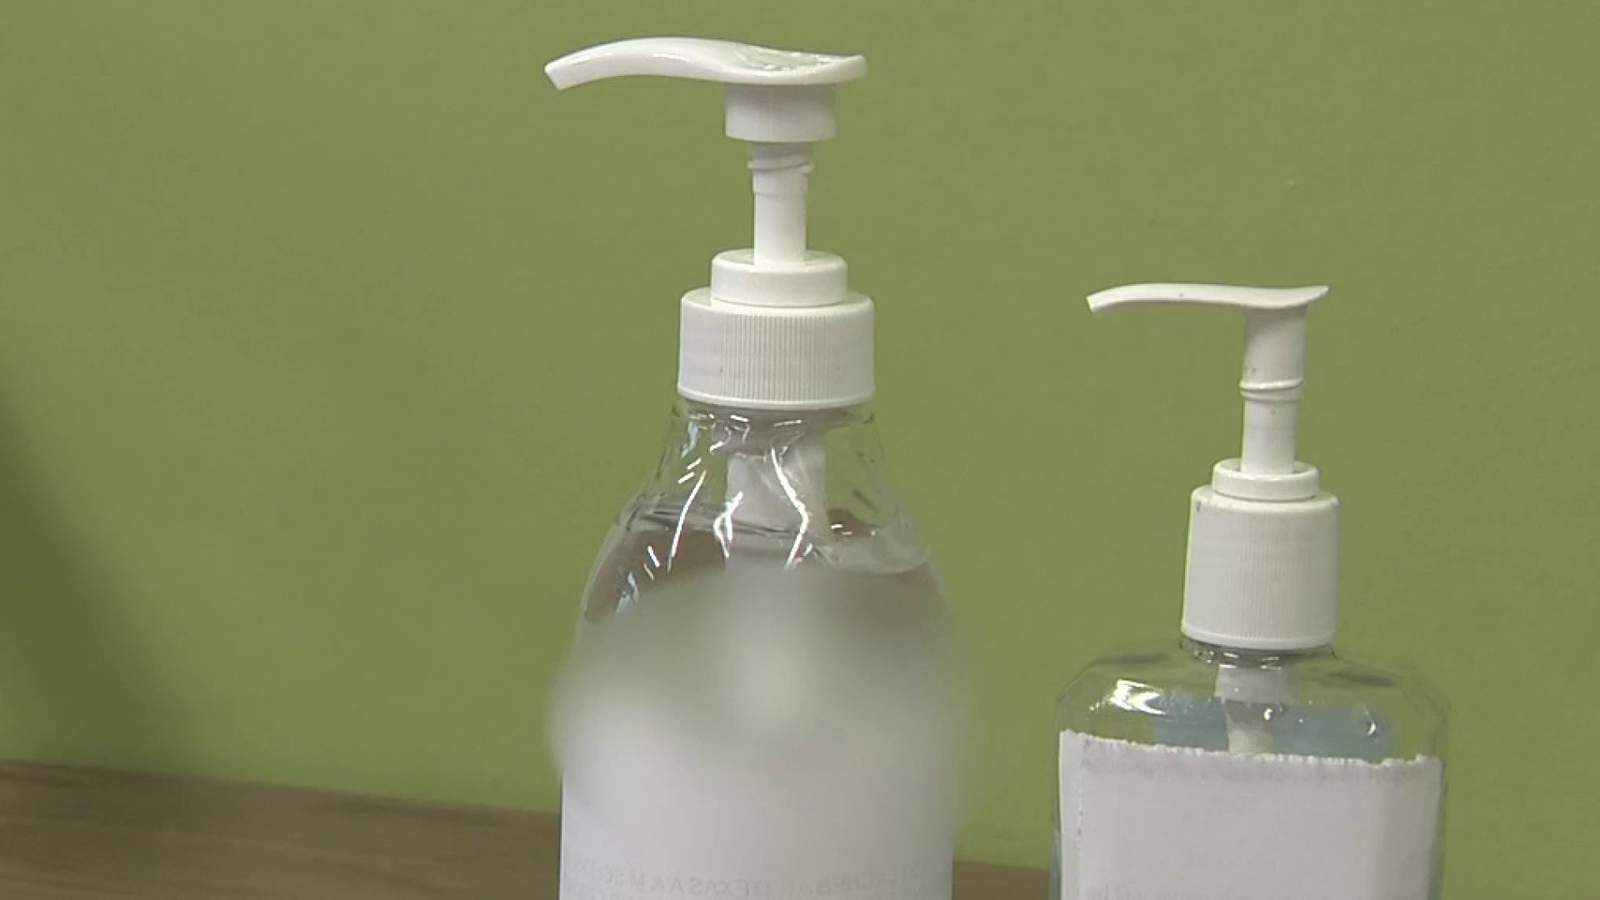 Certain hand sanitizers may be toxic, FDA warns